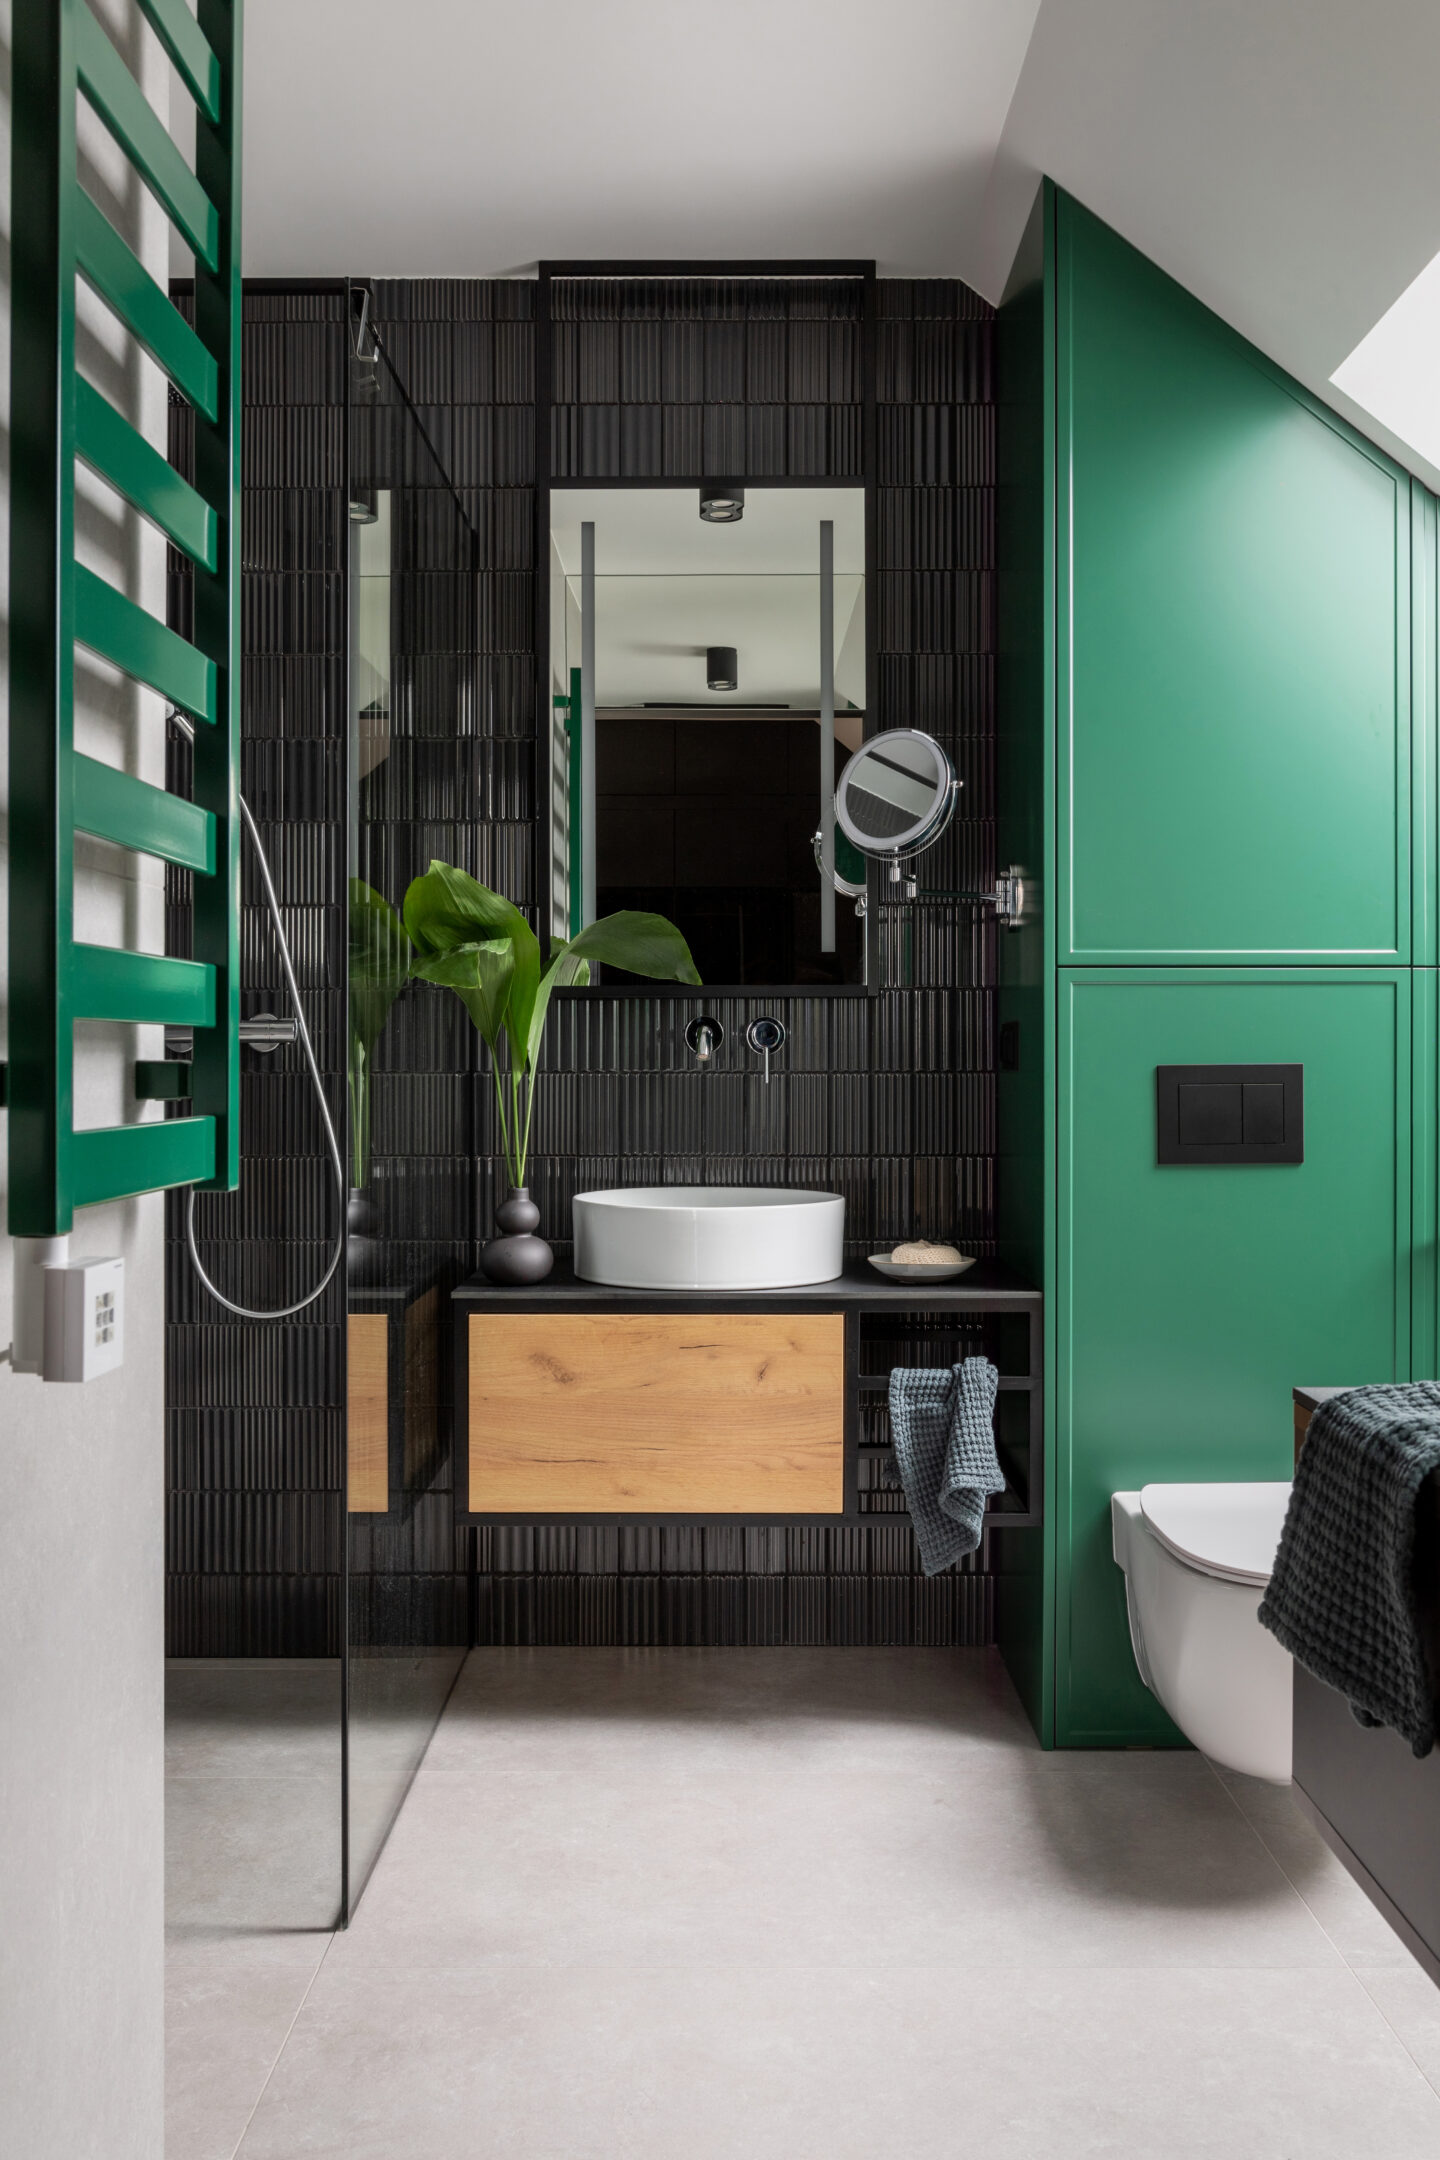 Aesthetic Bathroom Decor Ideas And Inspirations